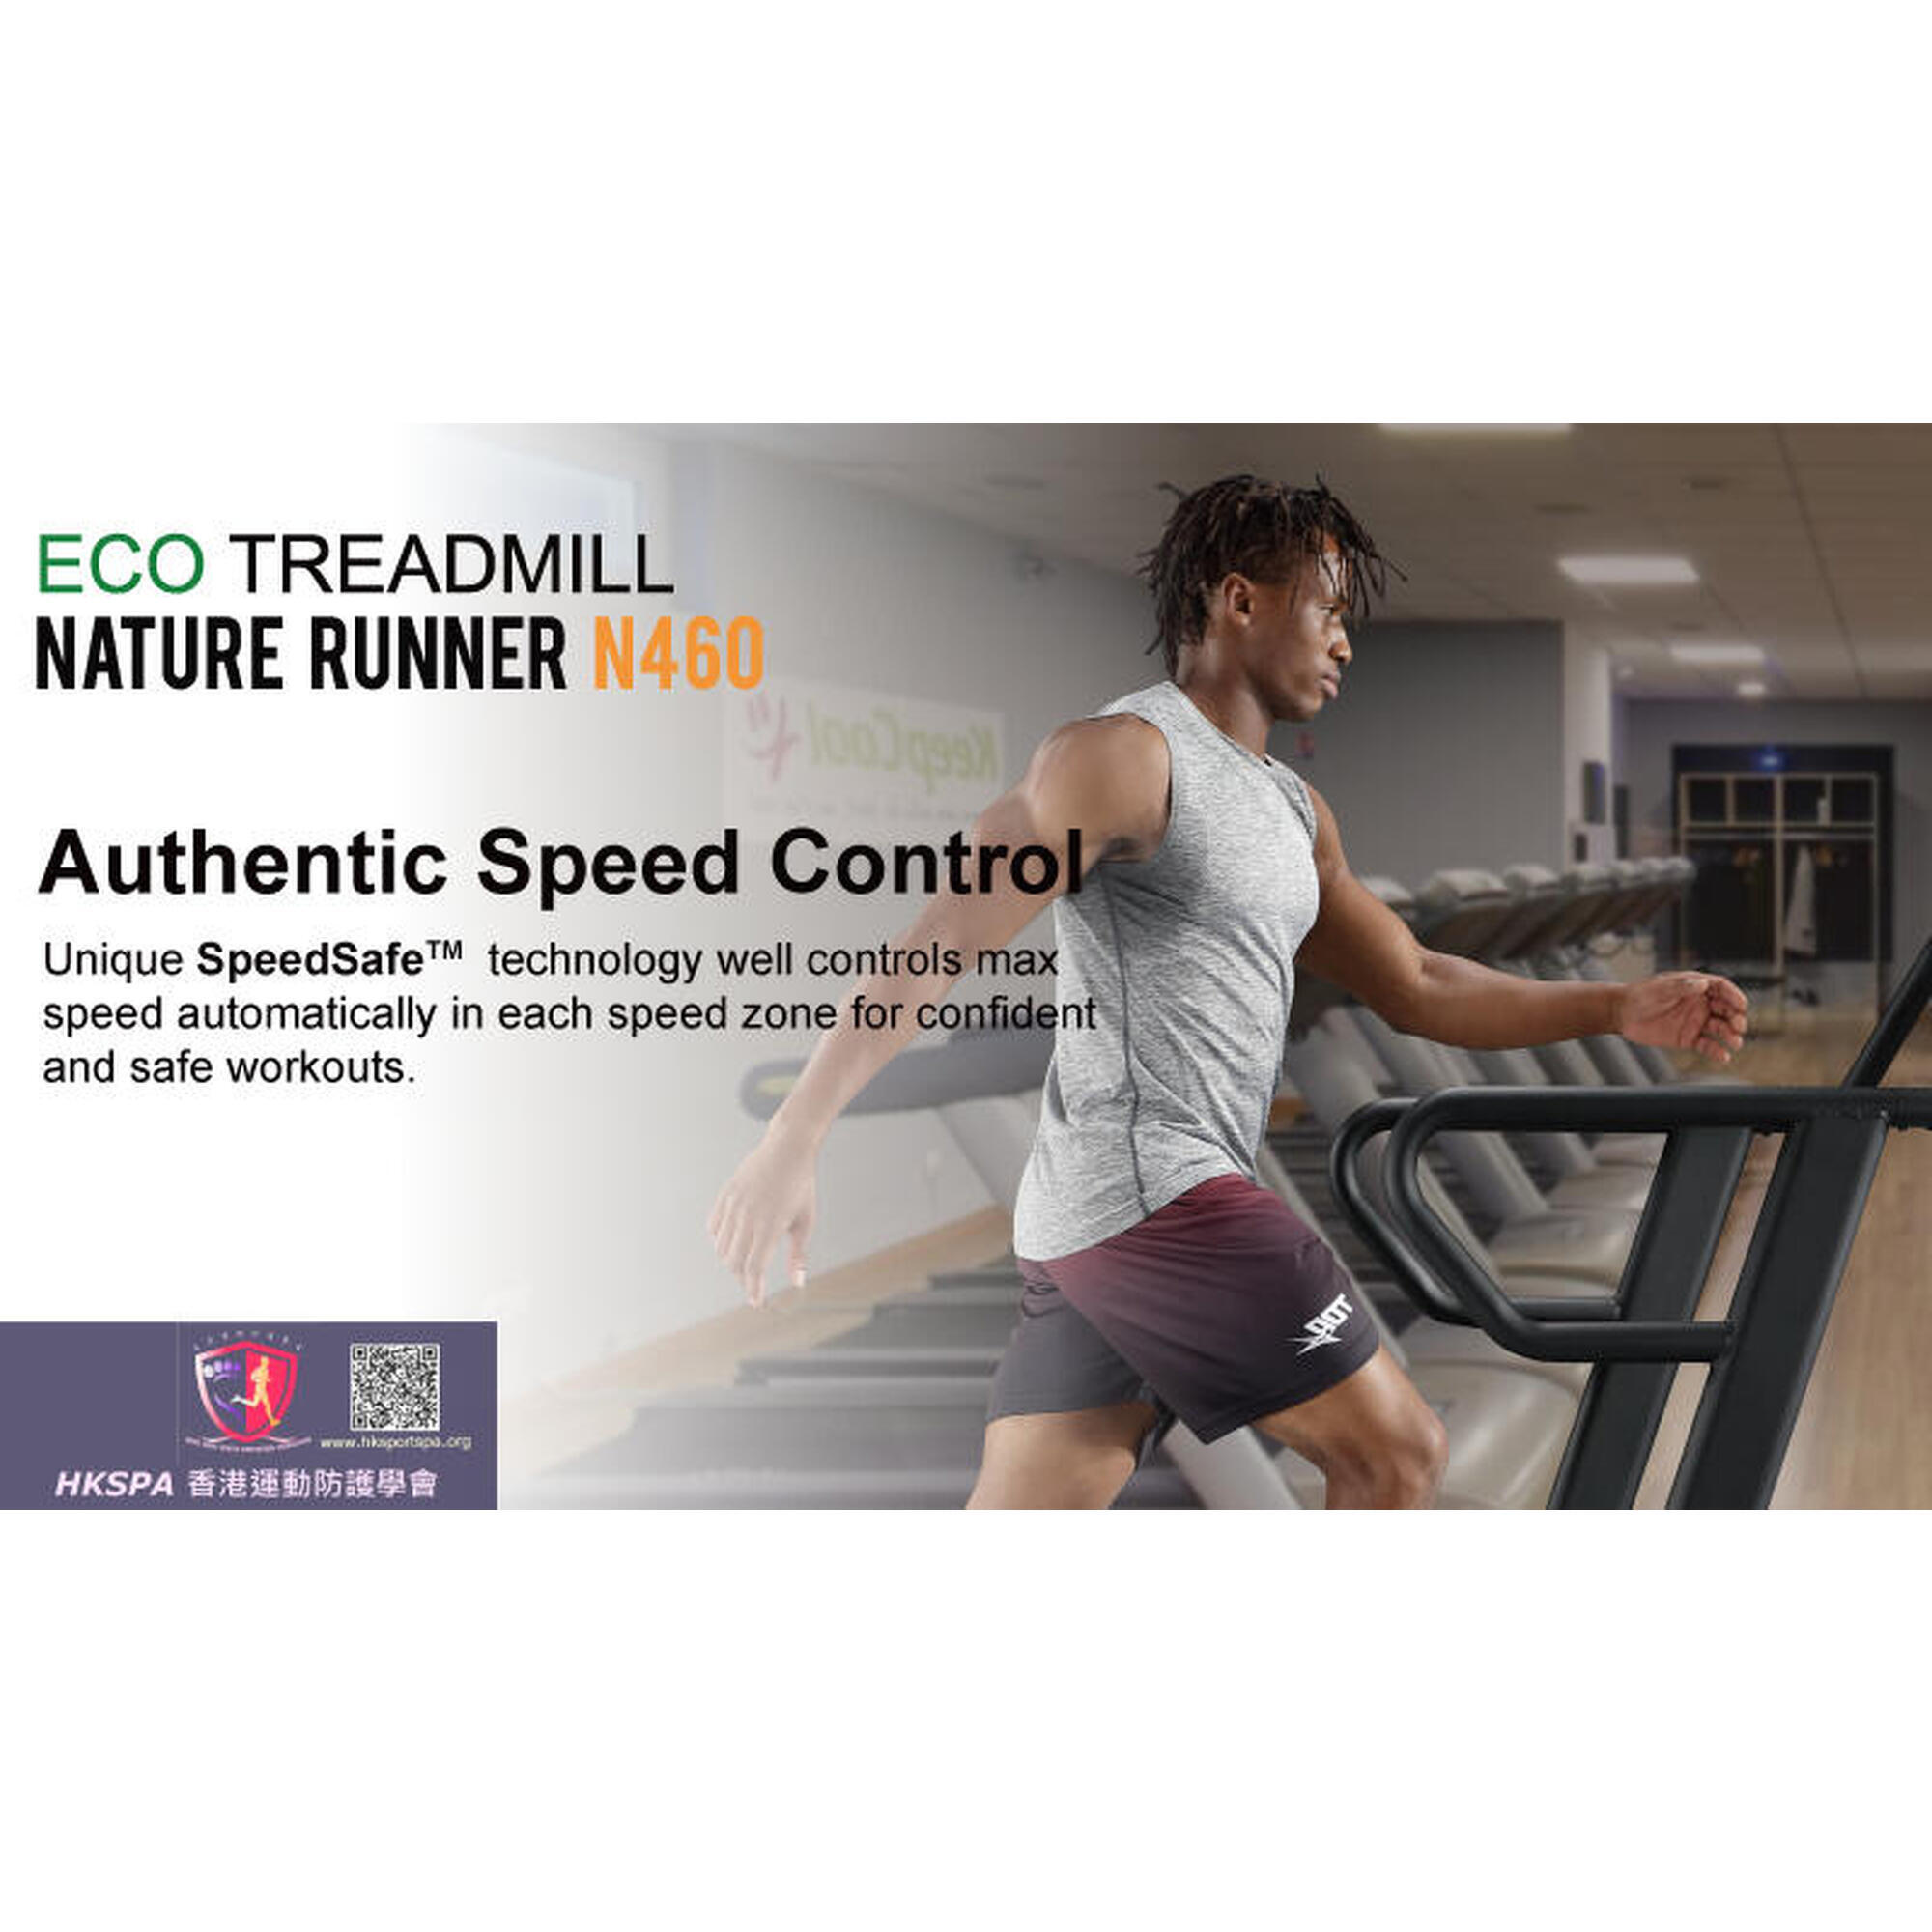 N460 Eco-Treadmill NATURE RUNNER